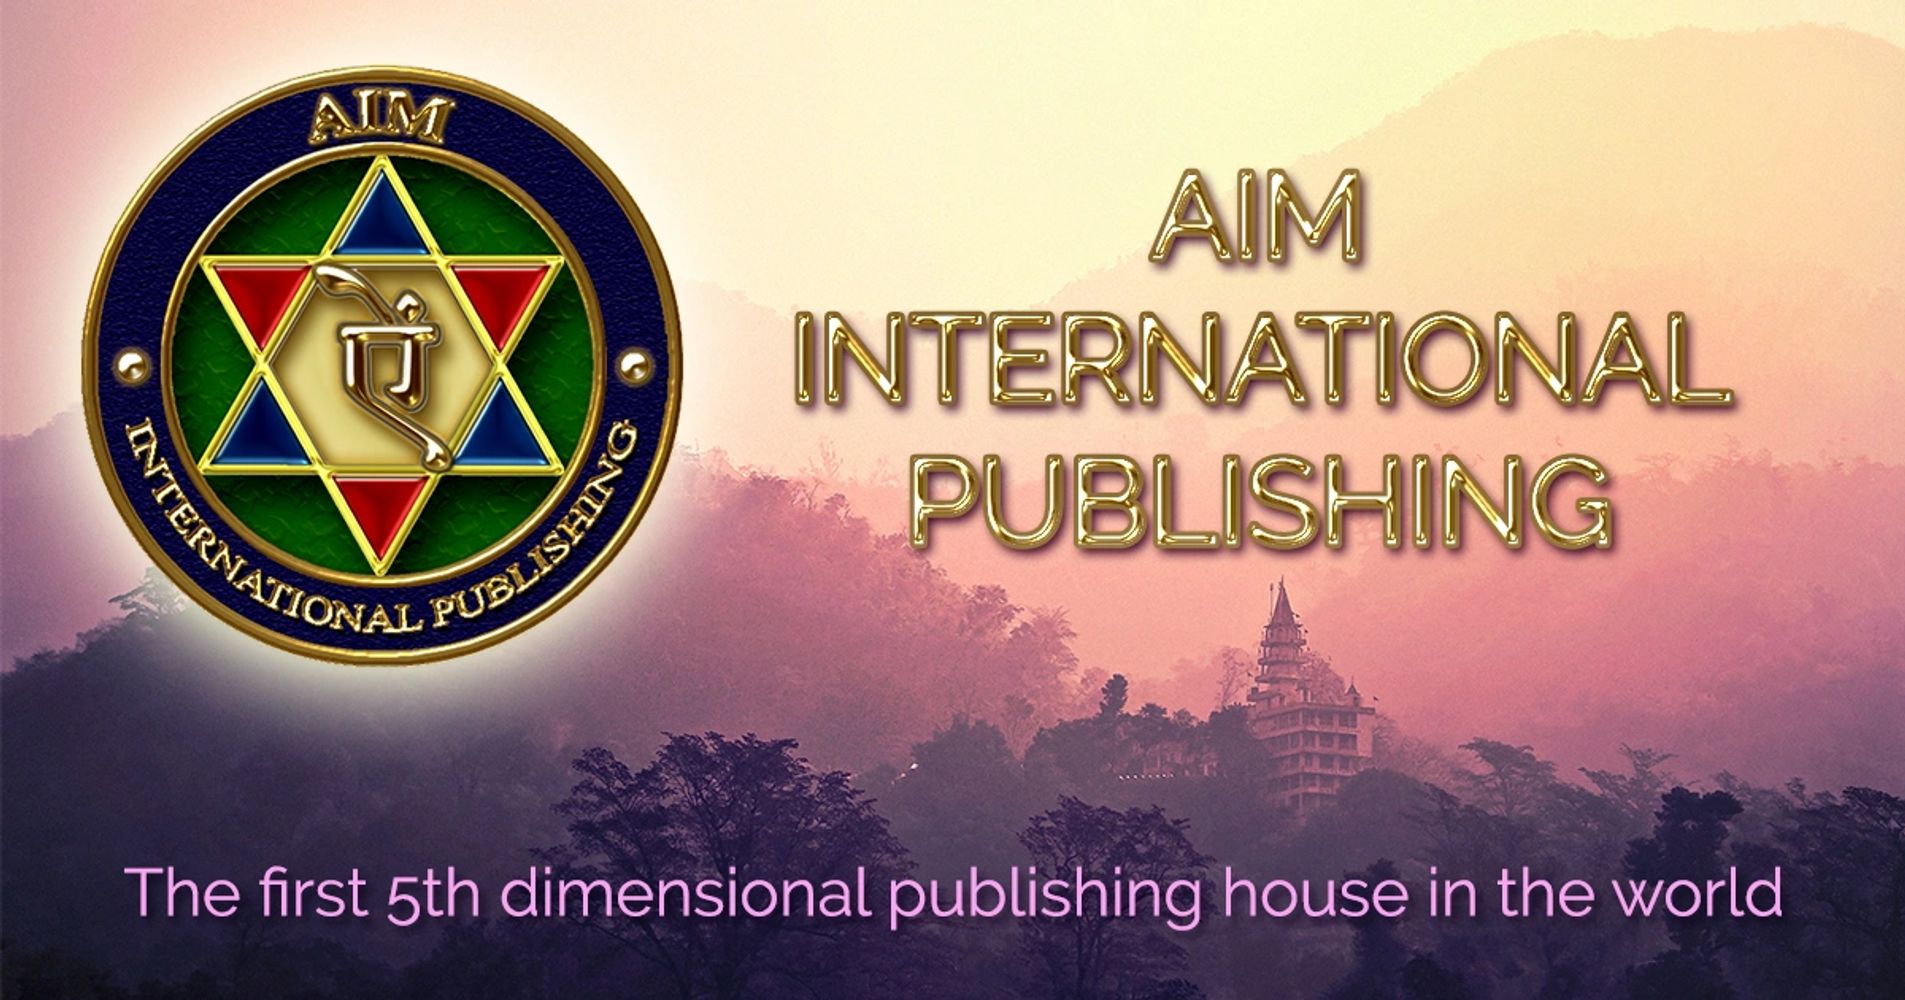 AIM INTERNATIONAL PUBLISHING
La prima casa editrice quintadimensionale al mondo!